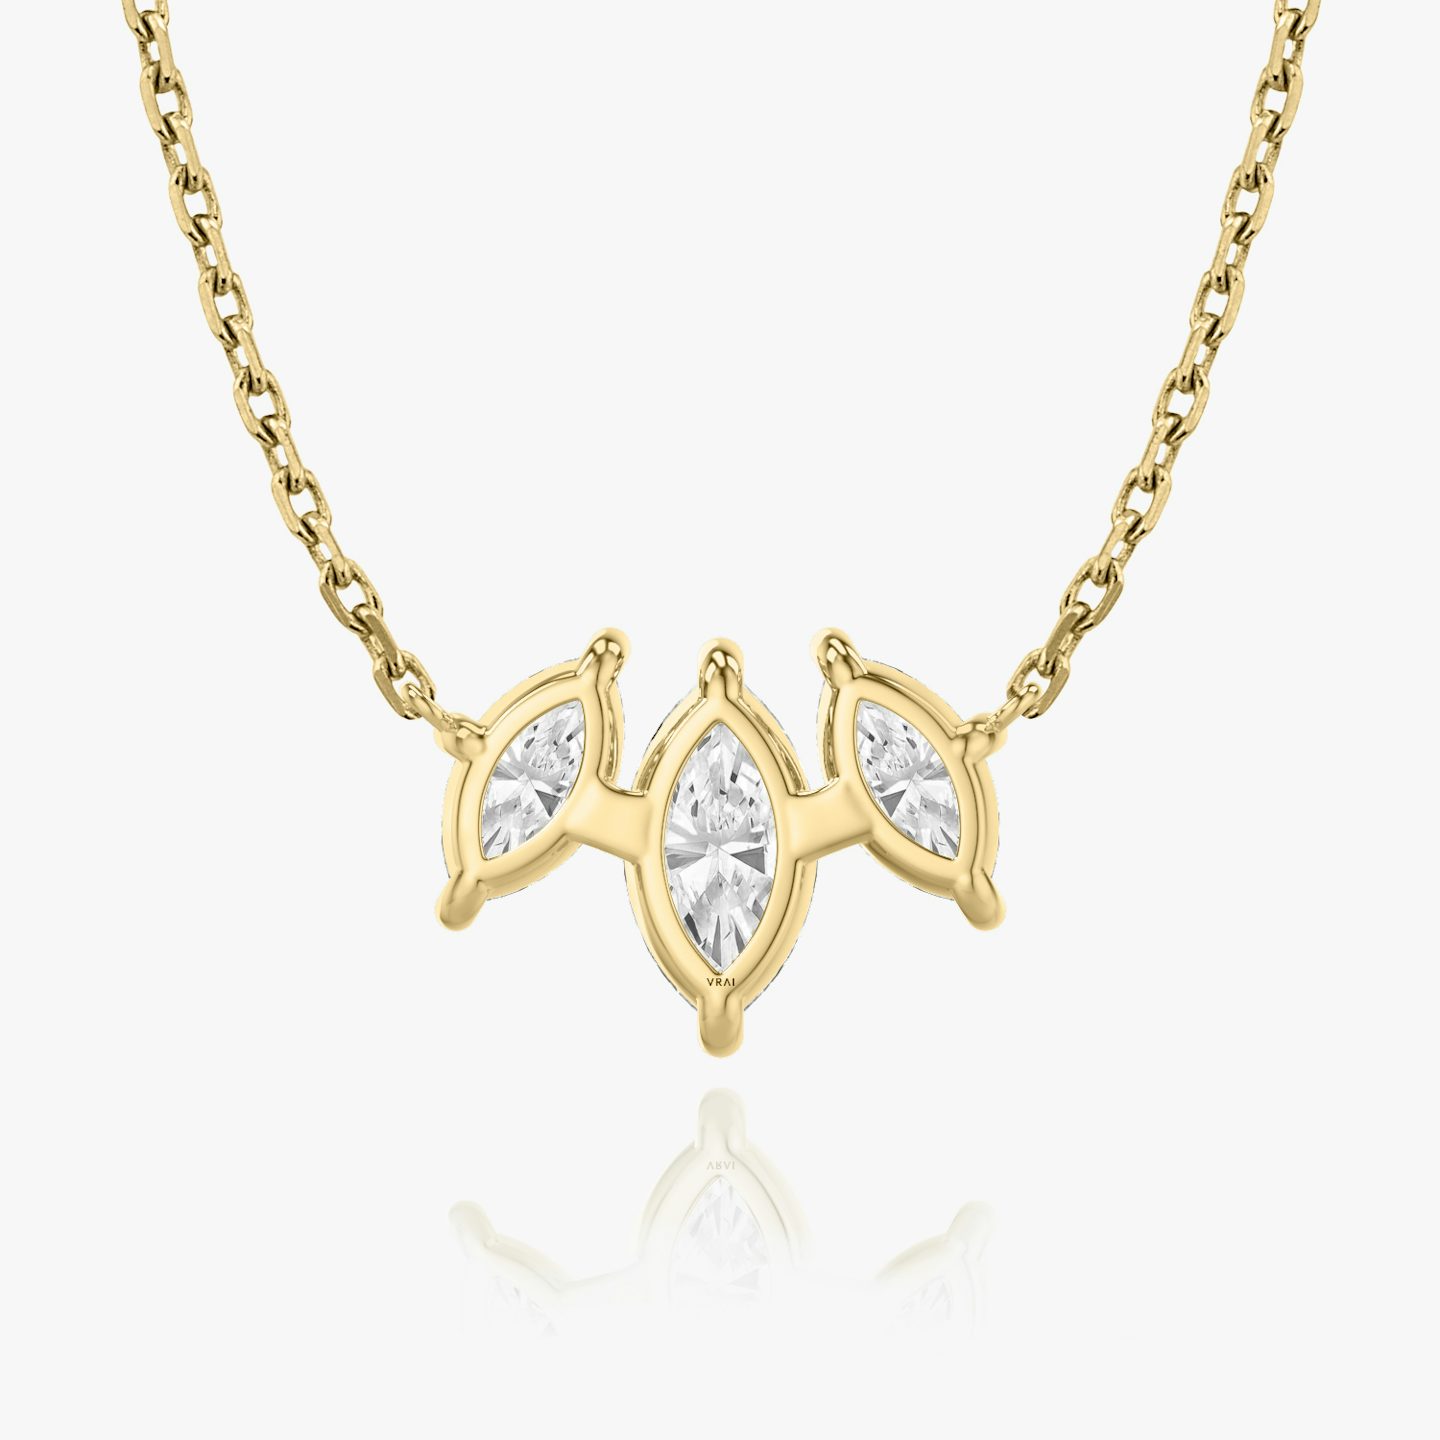 Arc Necklace | Marquise | 14k | Yellow Gold | diamondCount: 3 | diamondSize: large | chainLength: 16-18